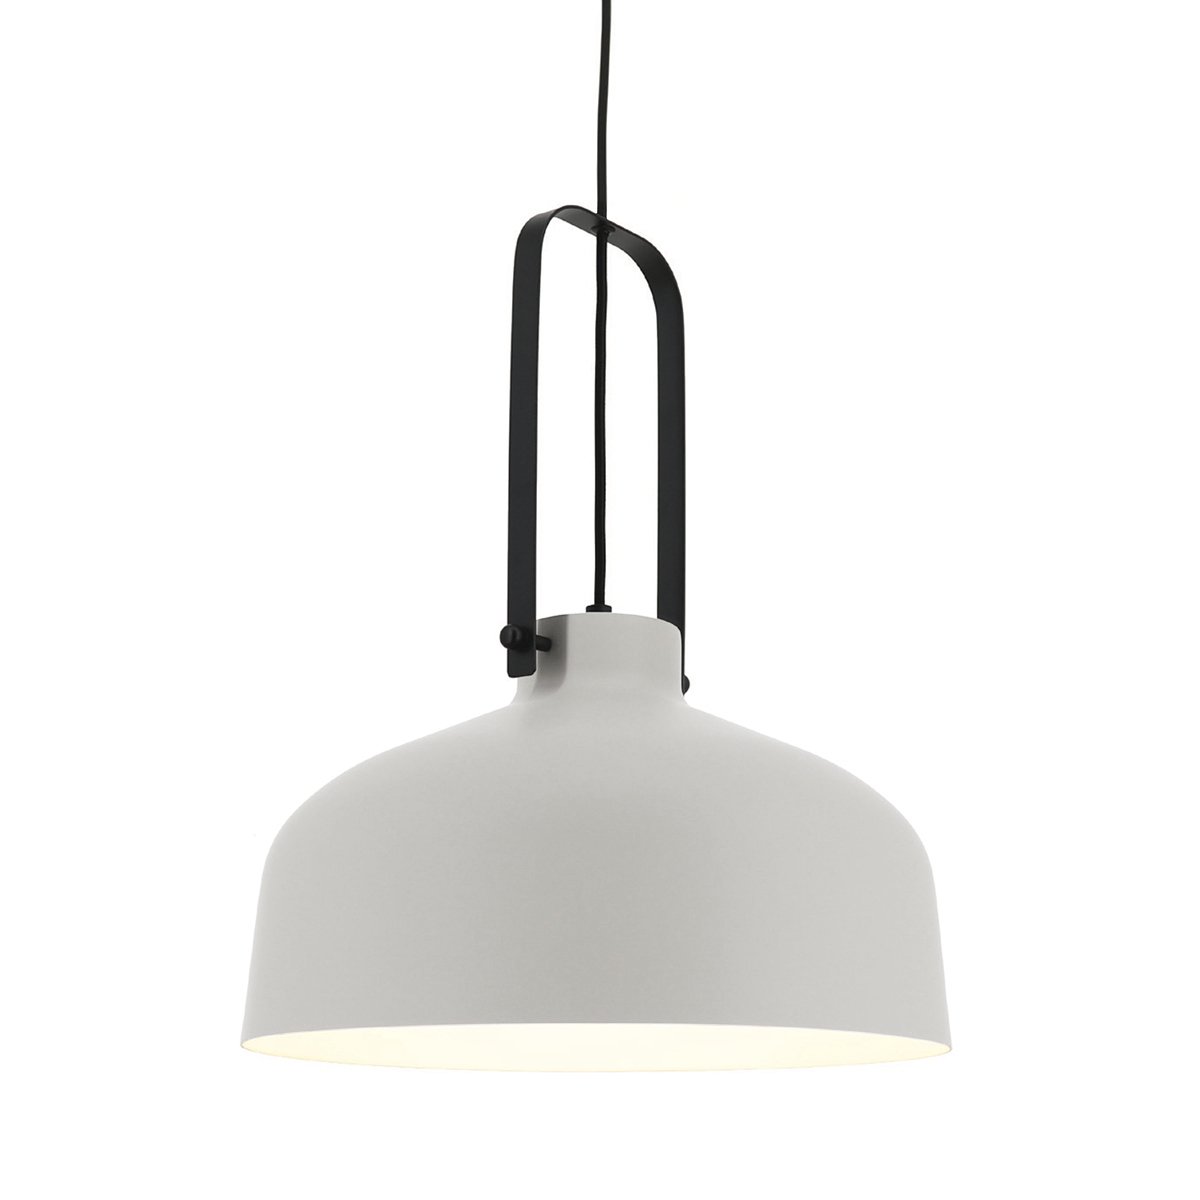 Keukenlampen Fabriekslamp industrieel wit Vaglia - Ø 37.5 cm